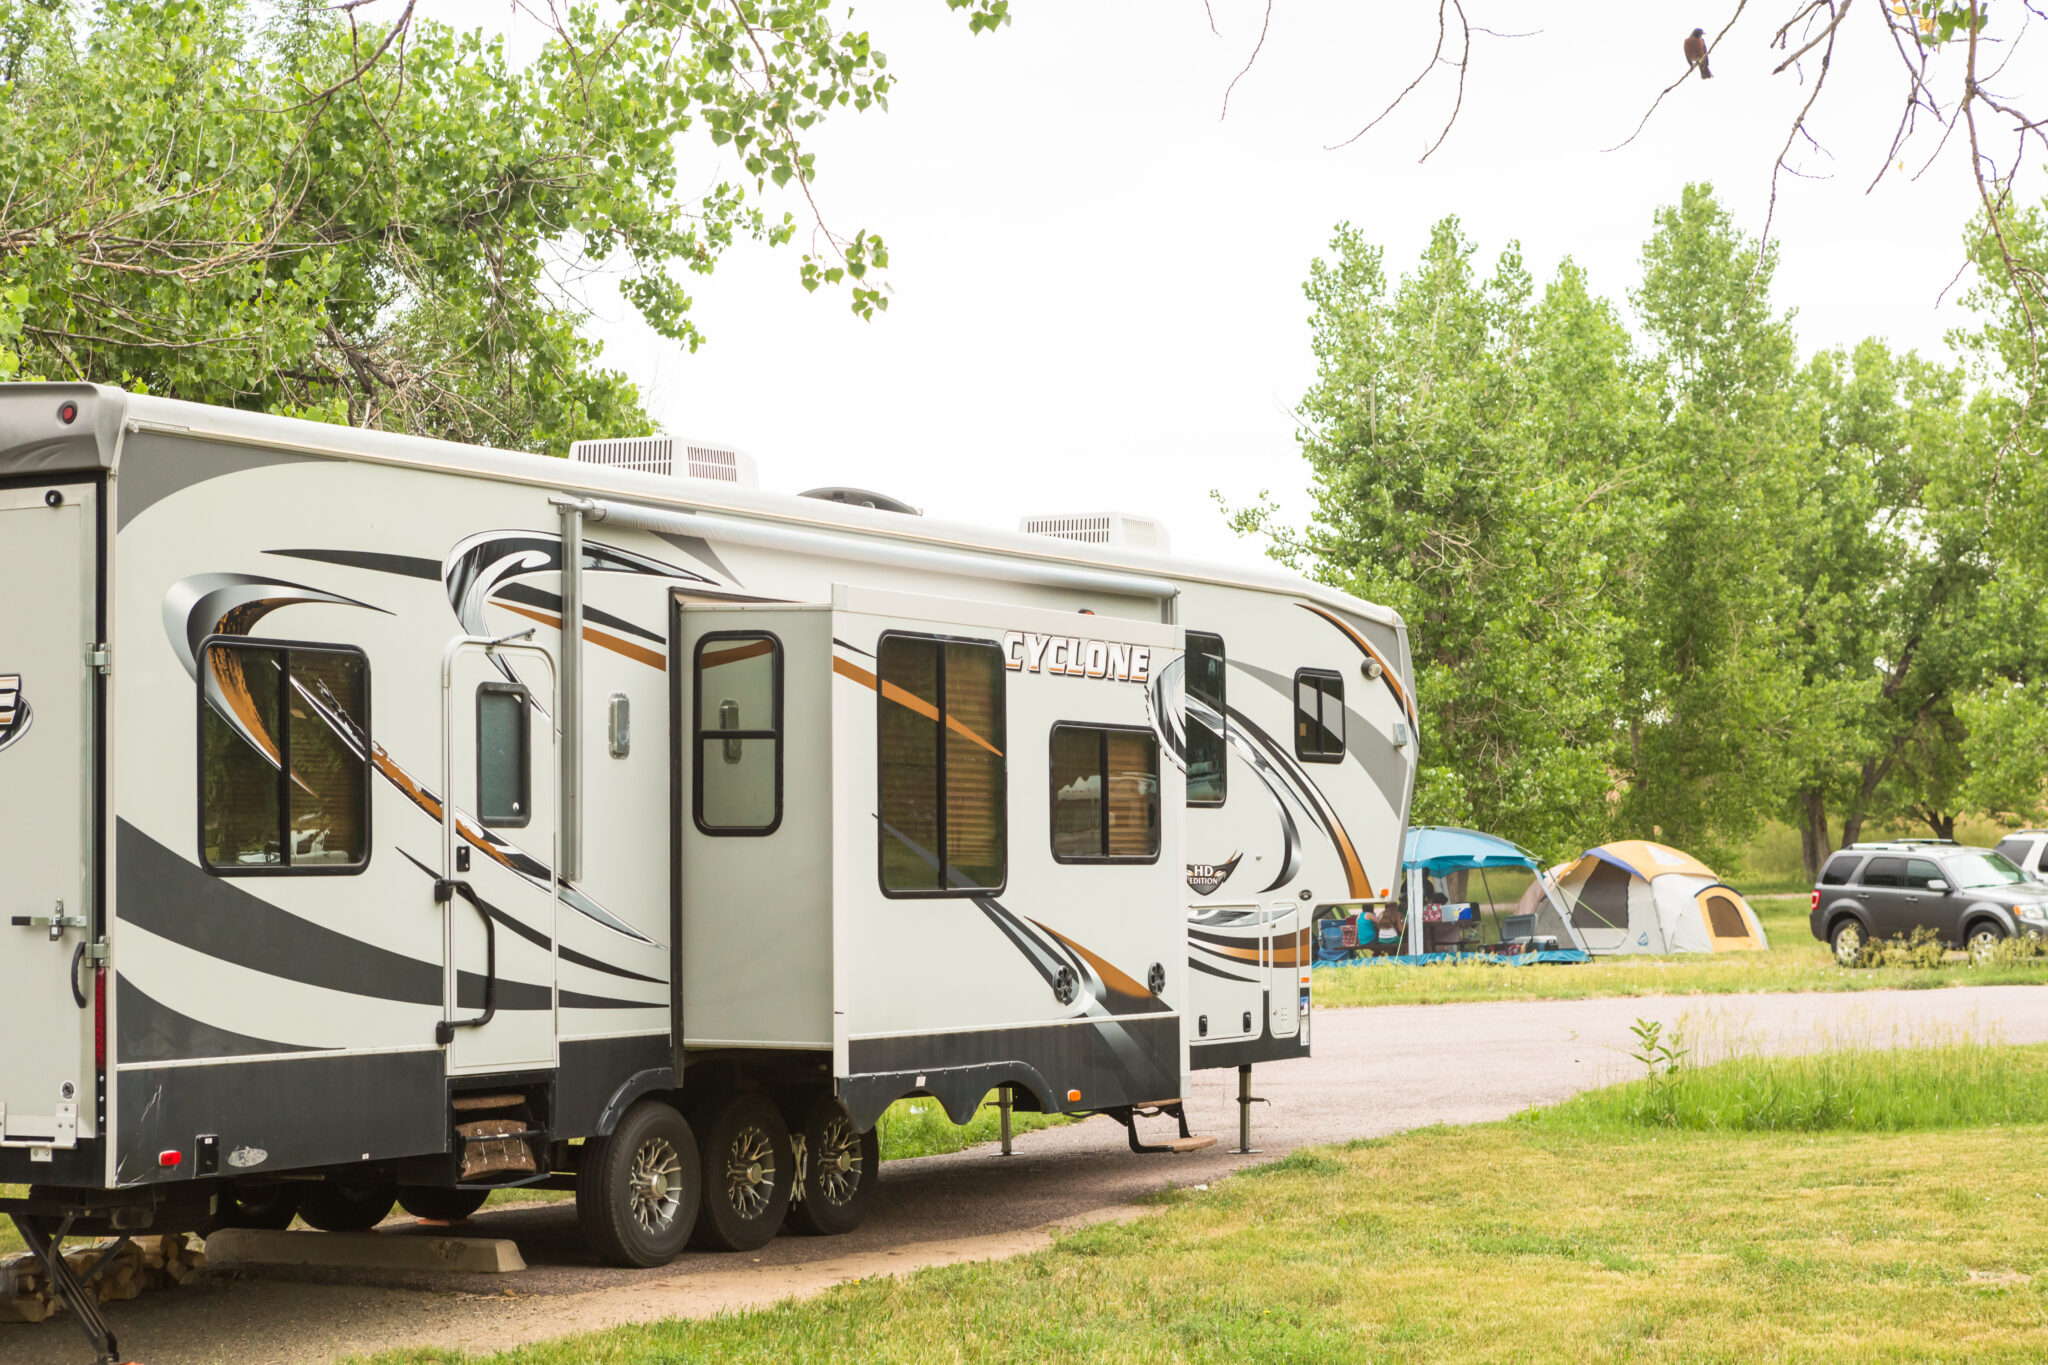 RV camping in Colorado campsite